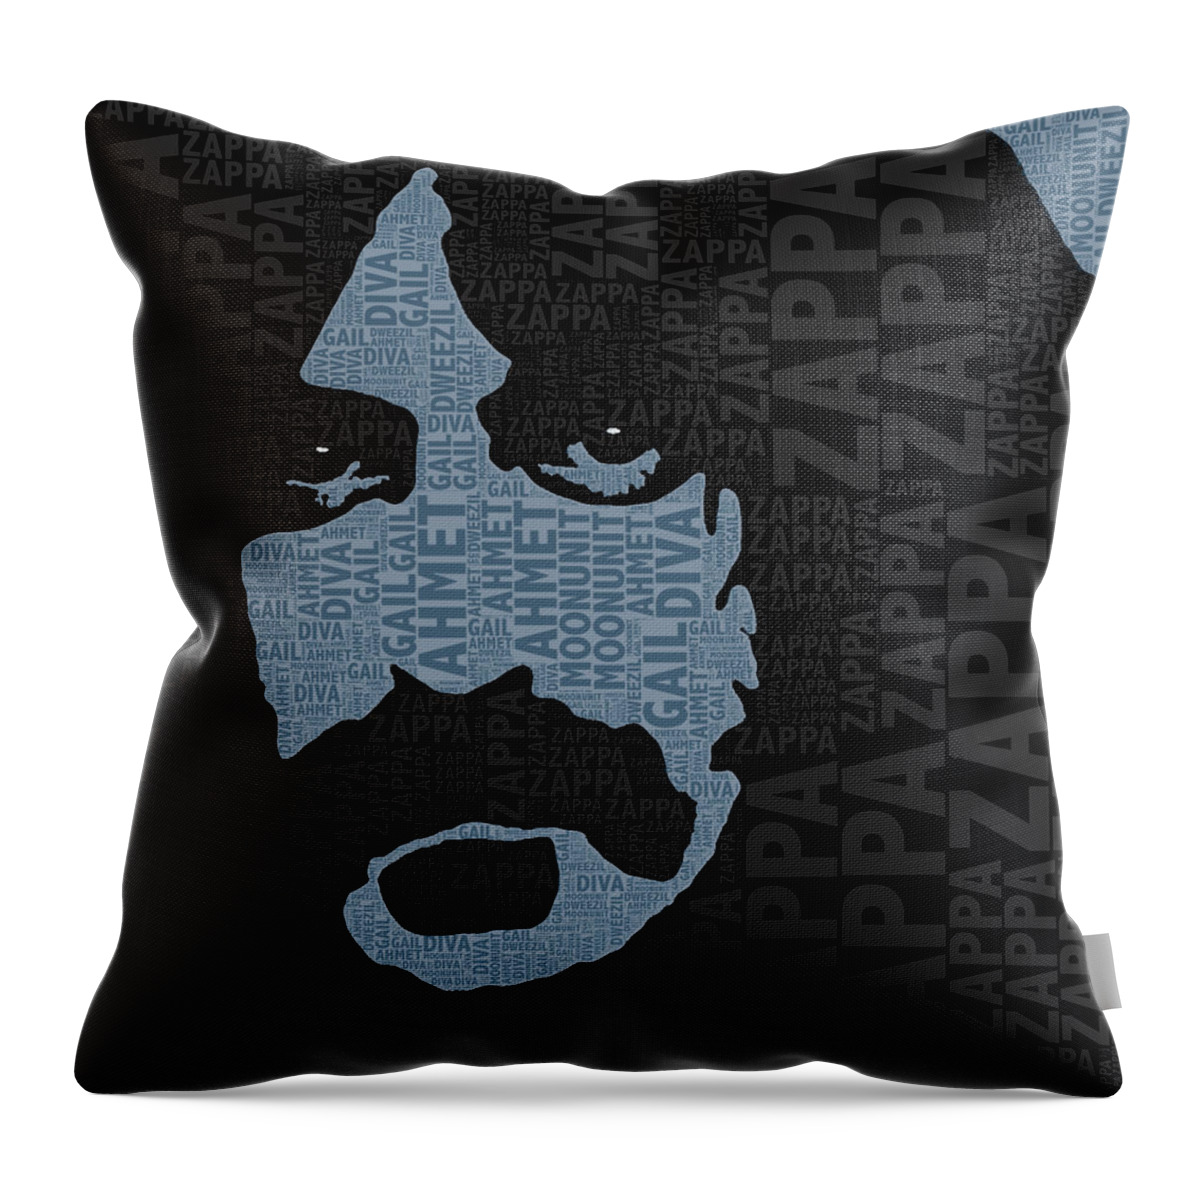 Frank Zappa Throw Pillow featuring the painting Frank Zappa by Tony Rubino